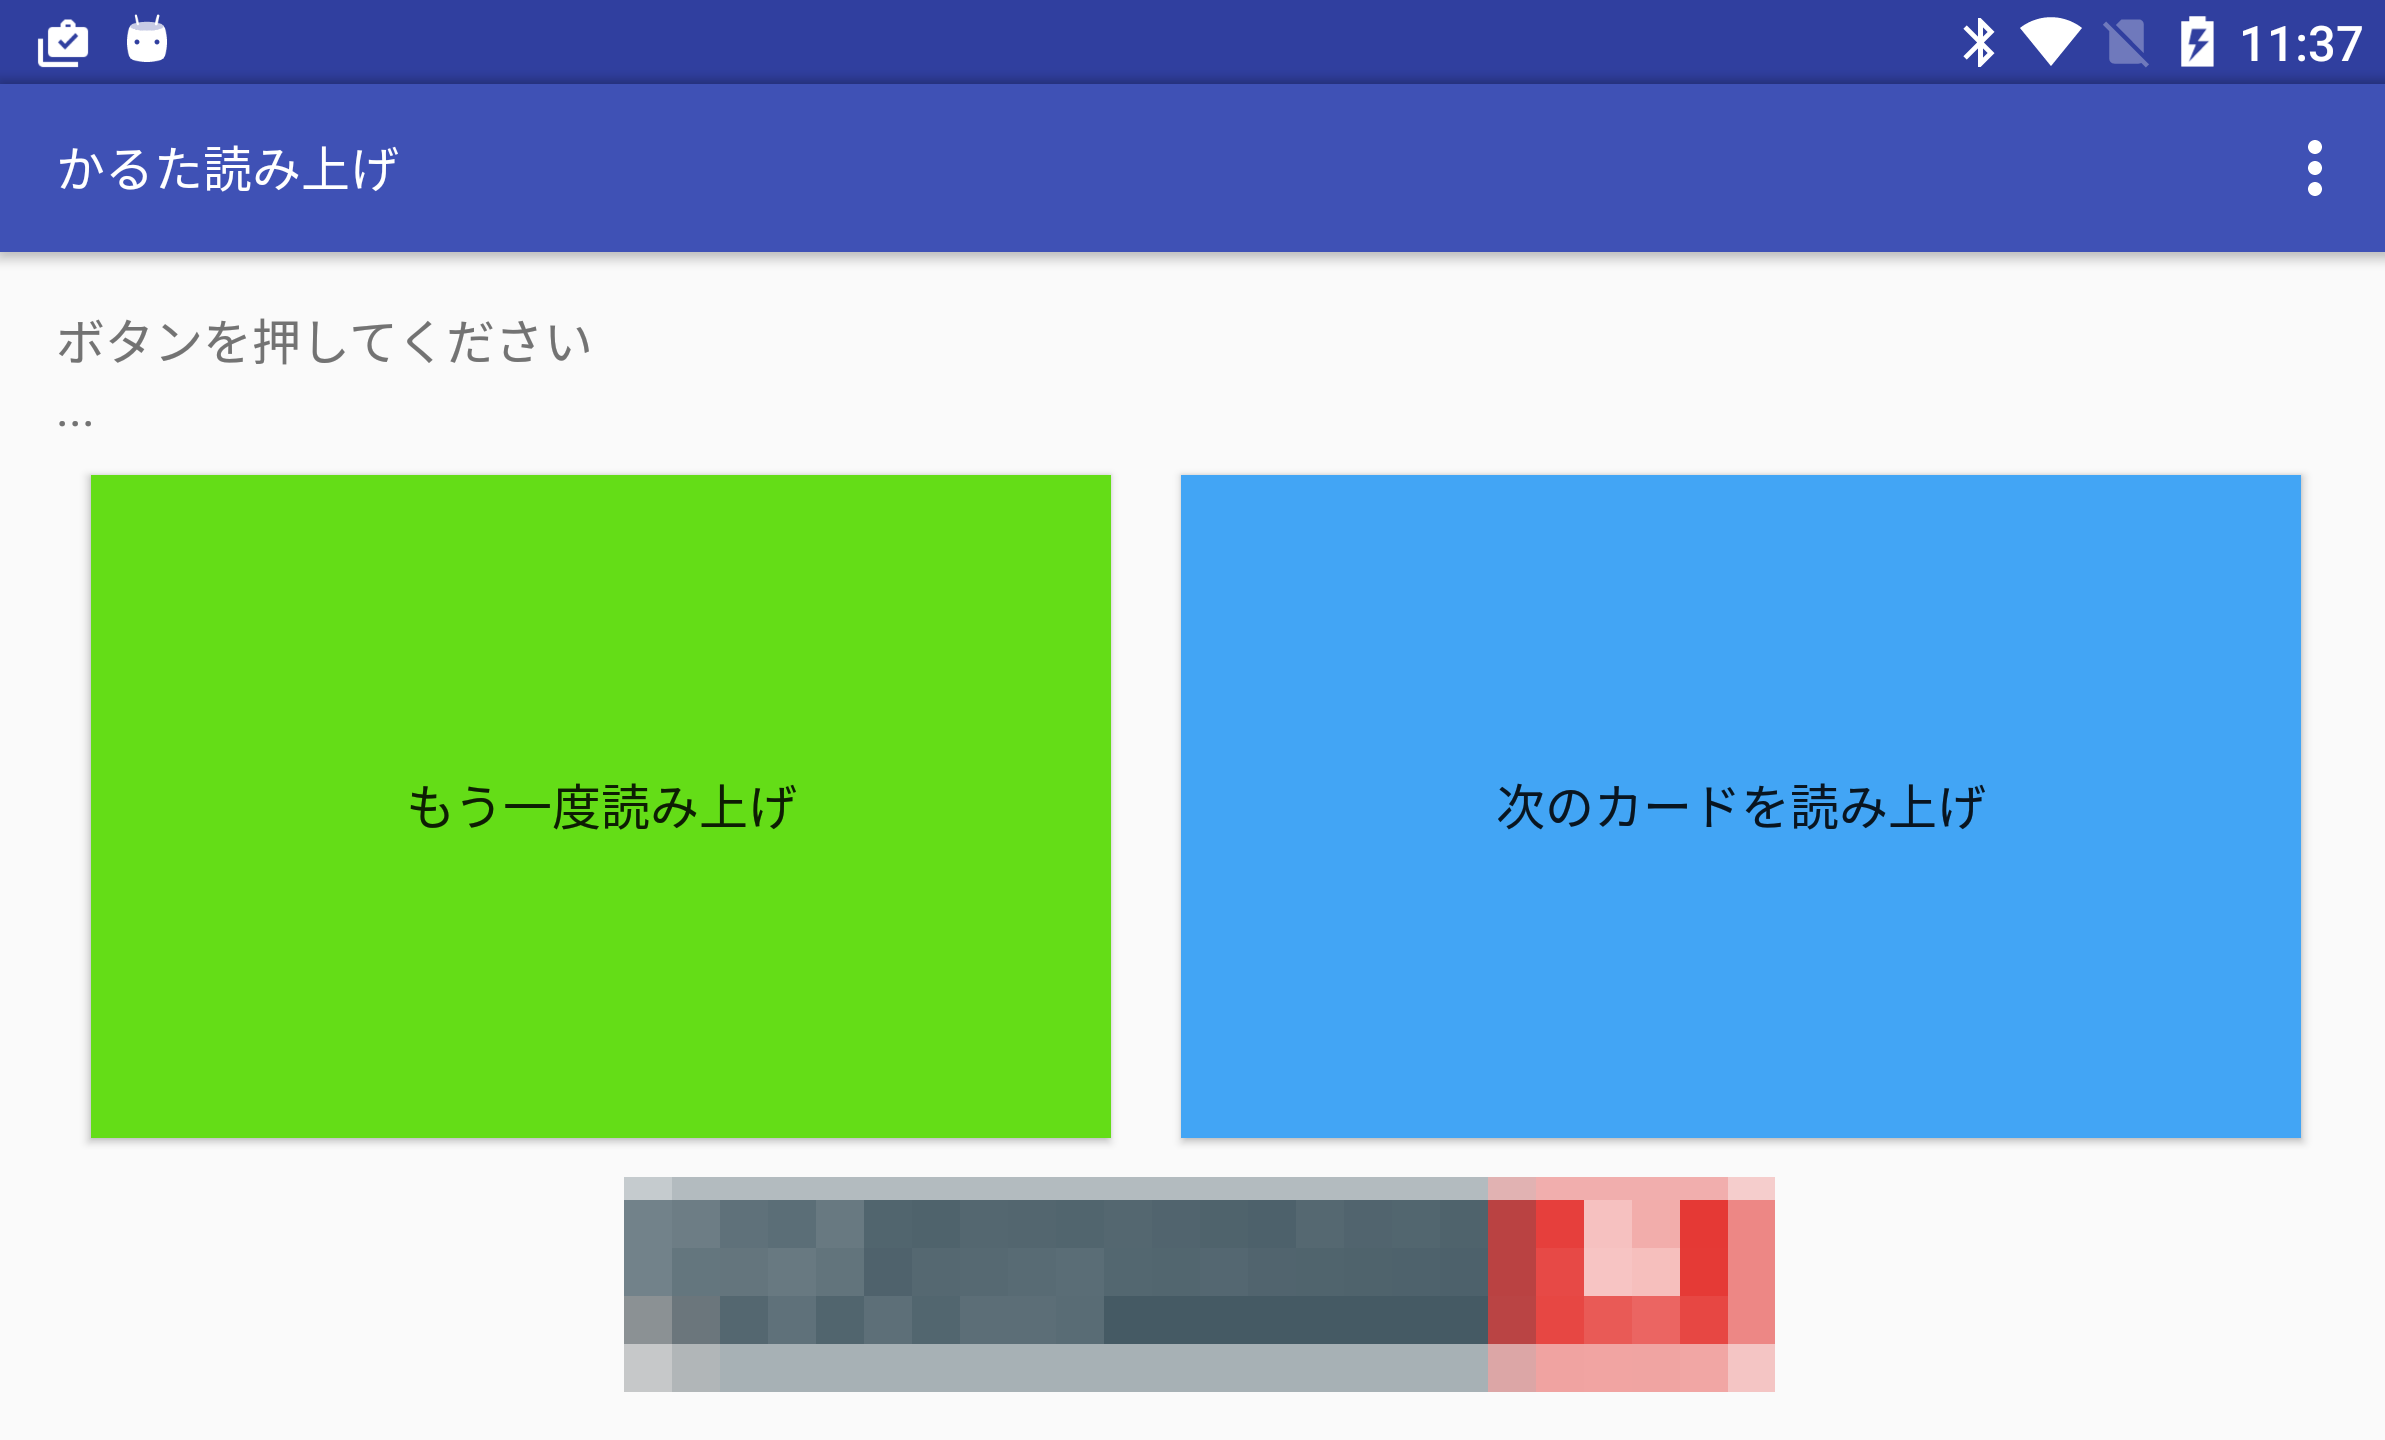 Android application Karuta To Speech screenshort